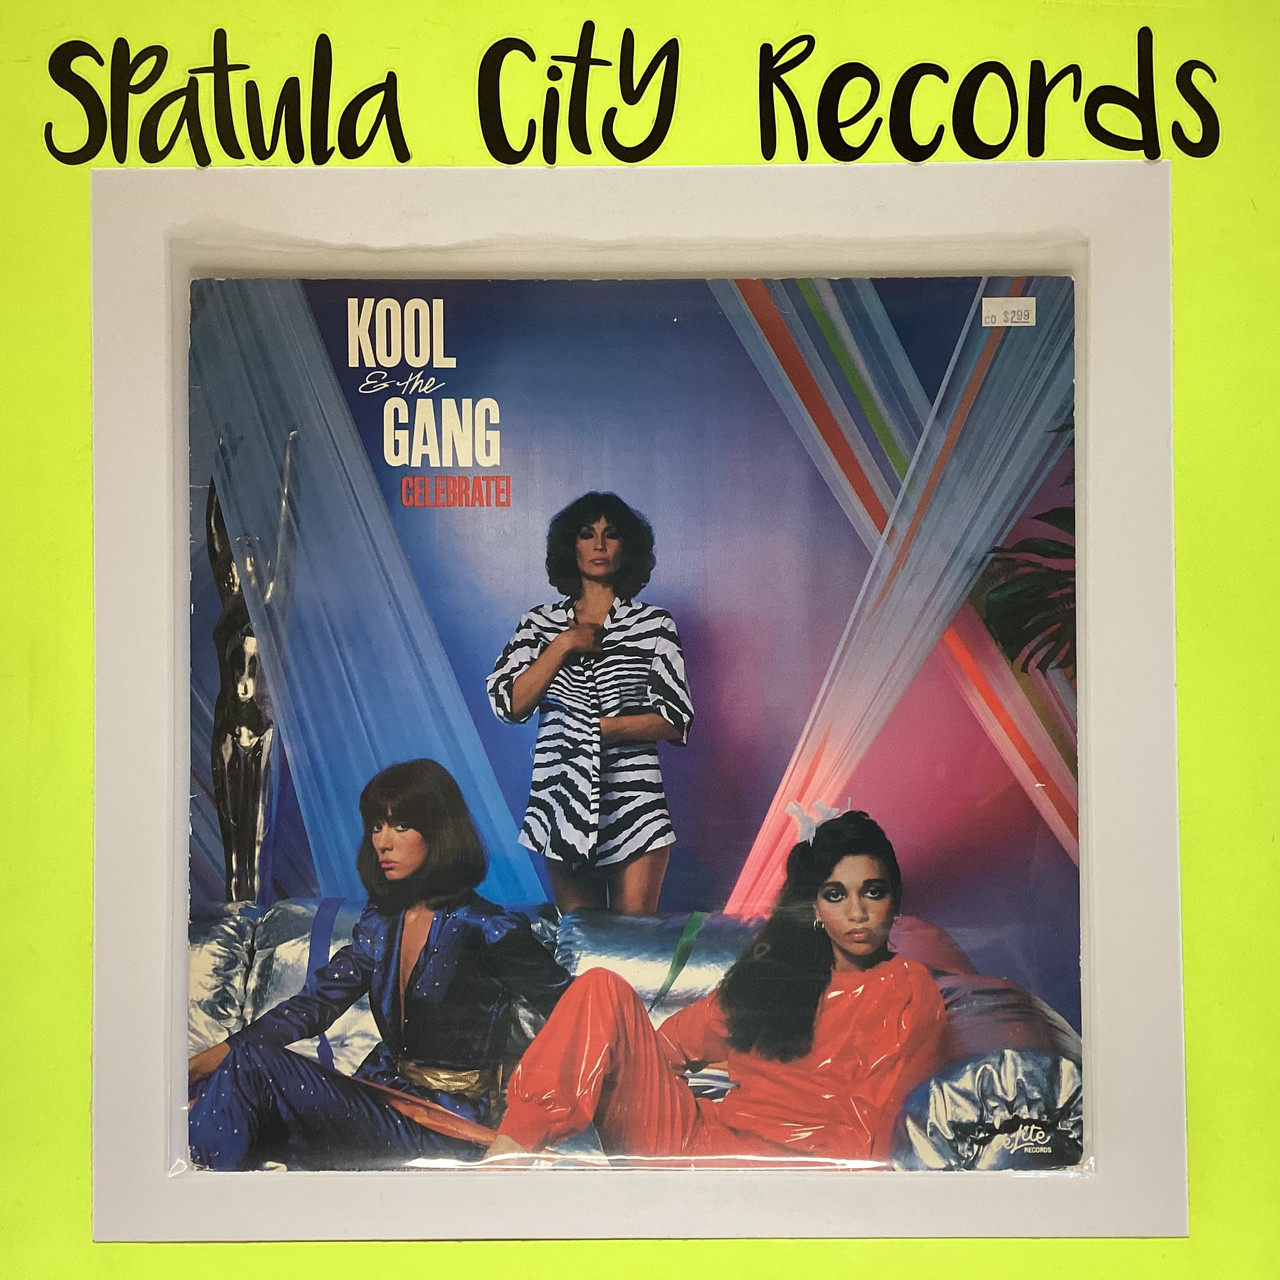 Kool and the Gang - Celebrate!  - vinyl record album LP